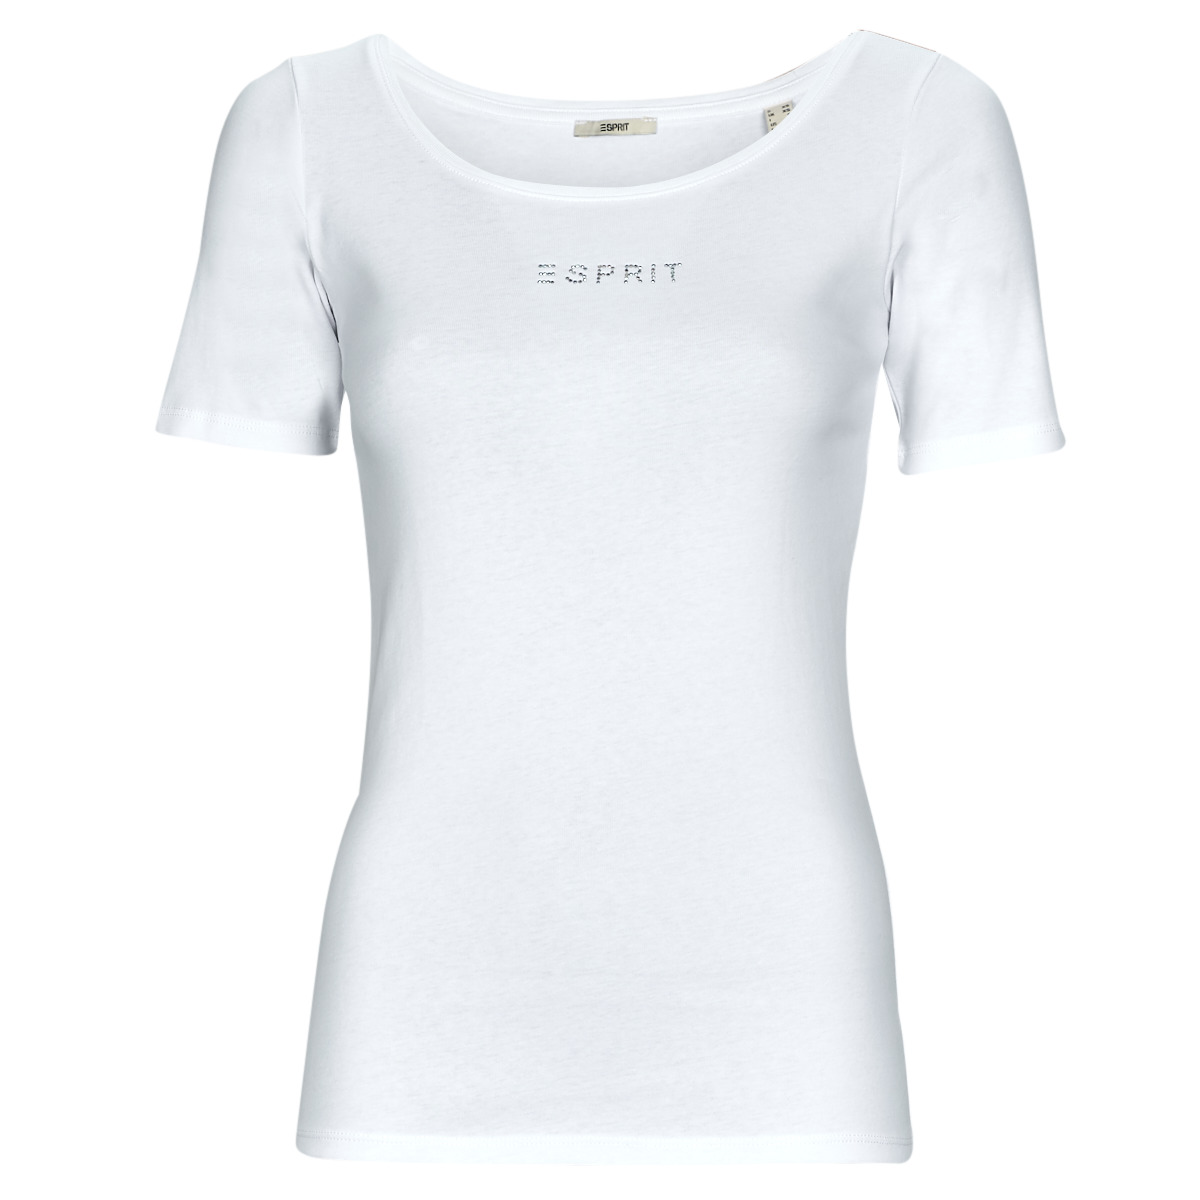 Vêtements Femme Jack Wills Ribbed Scoop Neck Long Sleeve T Shirt TSHIRT SL Blanc